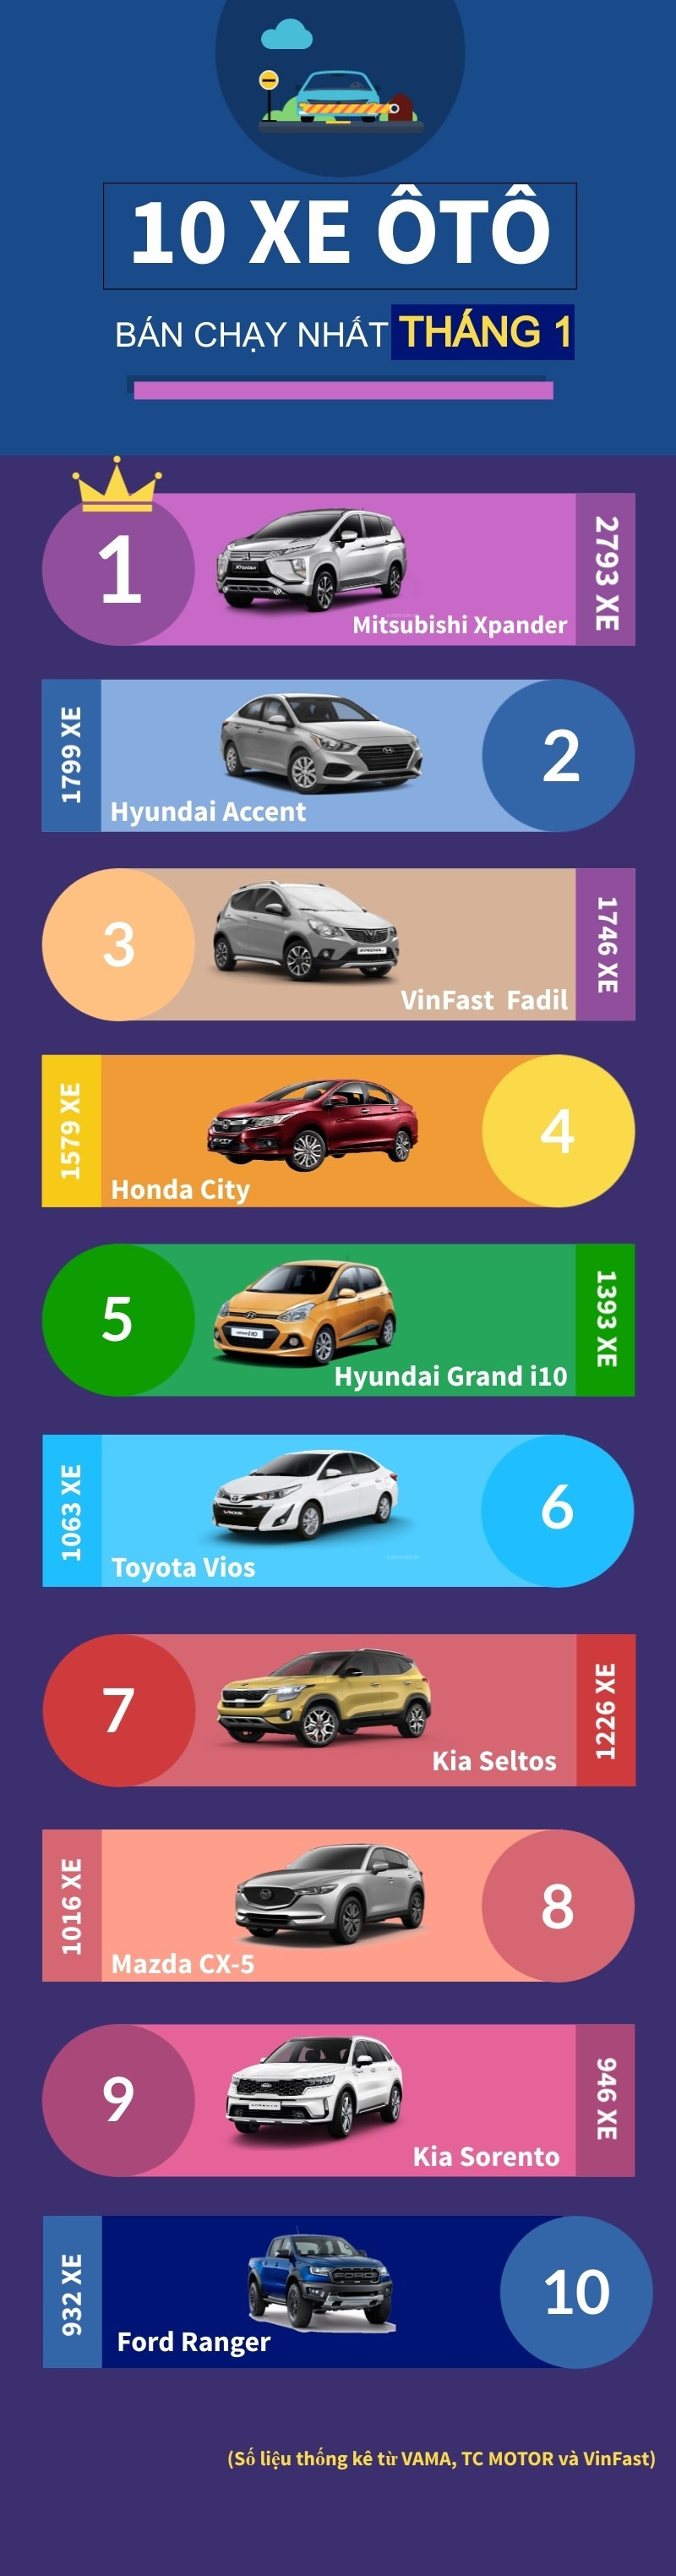 [Infographic] Top 10 mau xe oto ban chay nhat thi truong thang Mot hinh anh 1